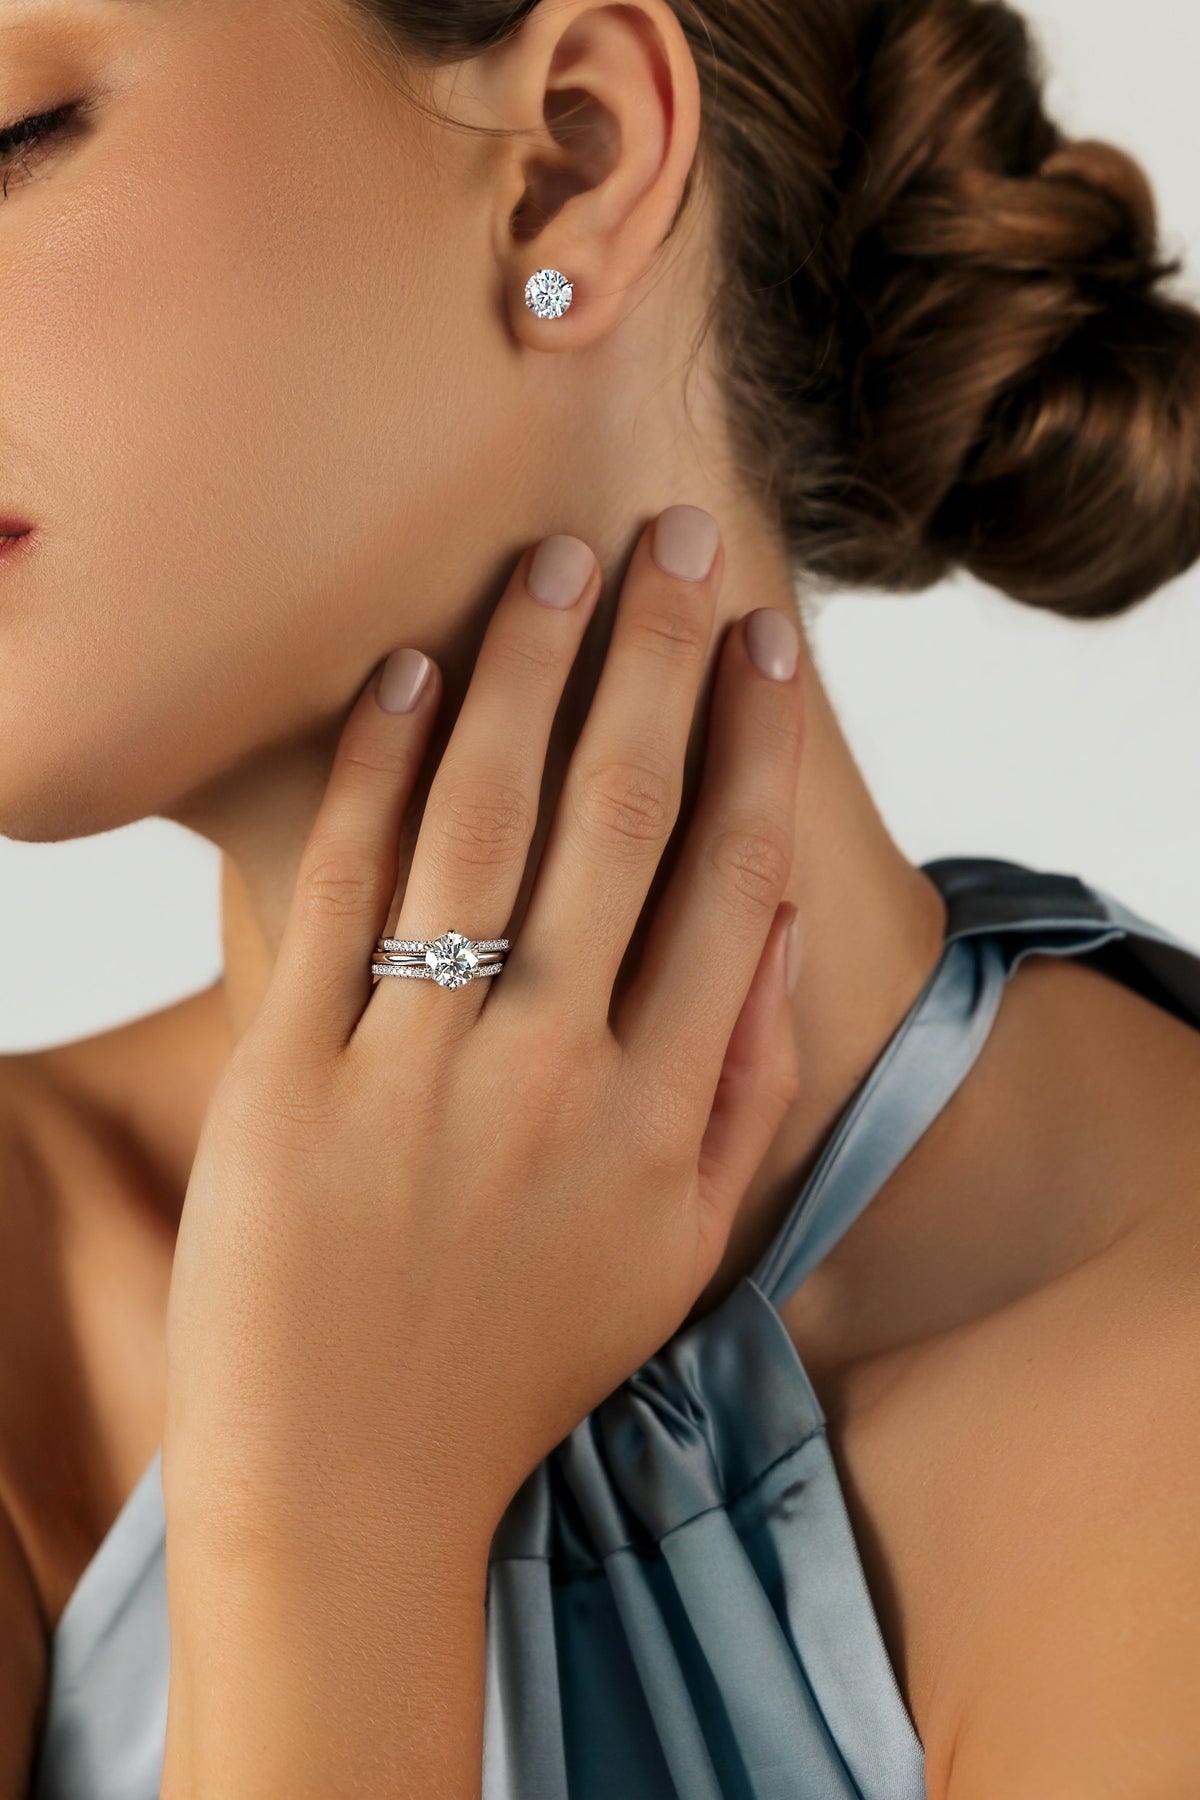 Secrets Shhh Premium Certified Laboratory Created Diamonds - Solitaire Rings